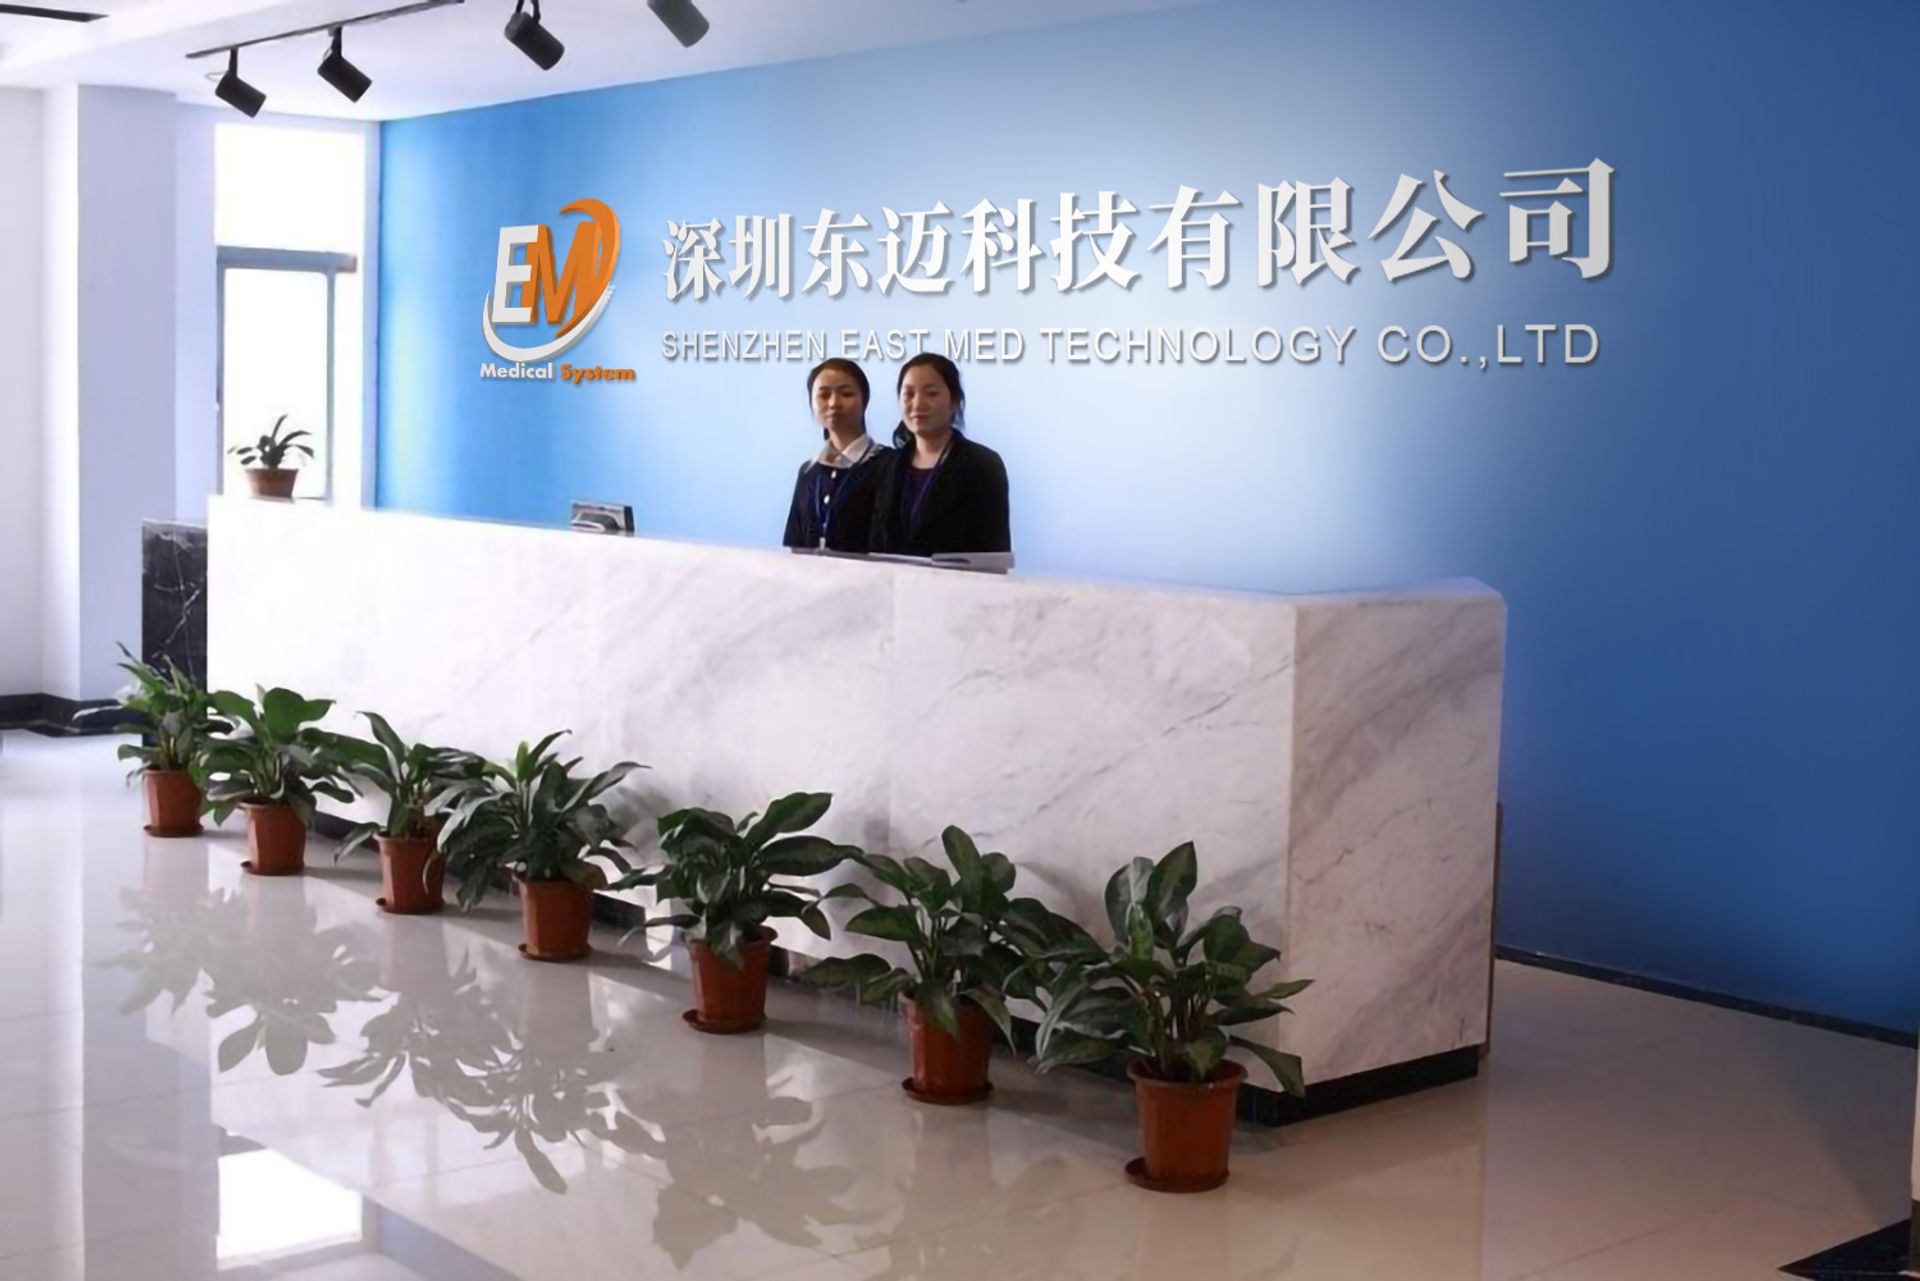 Shenzhen East Medical Technology Co., Ltd